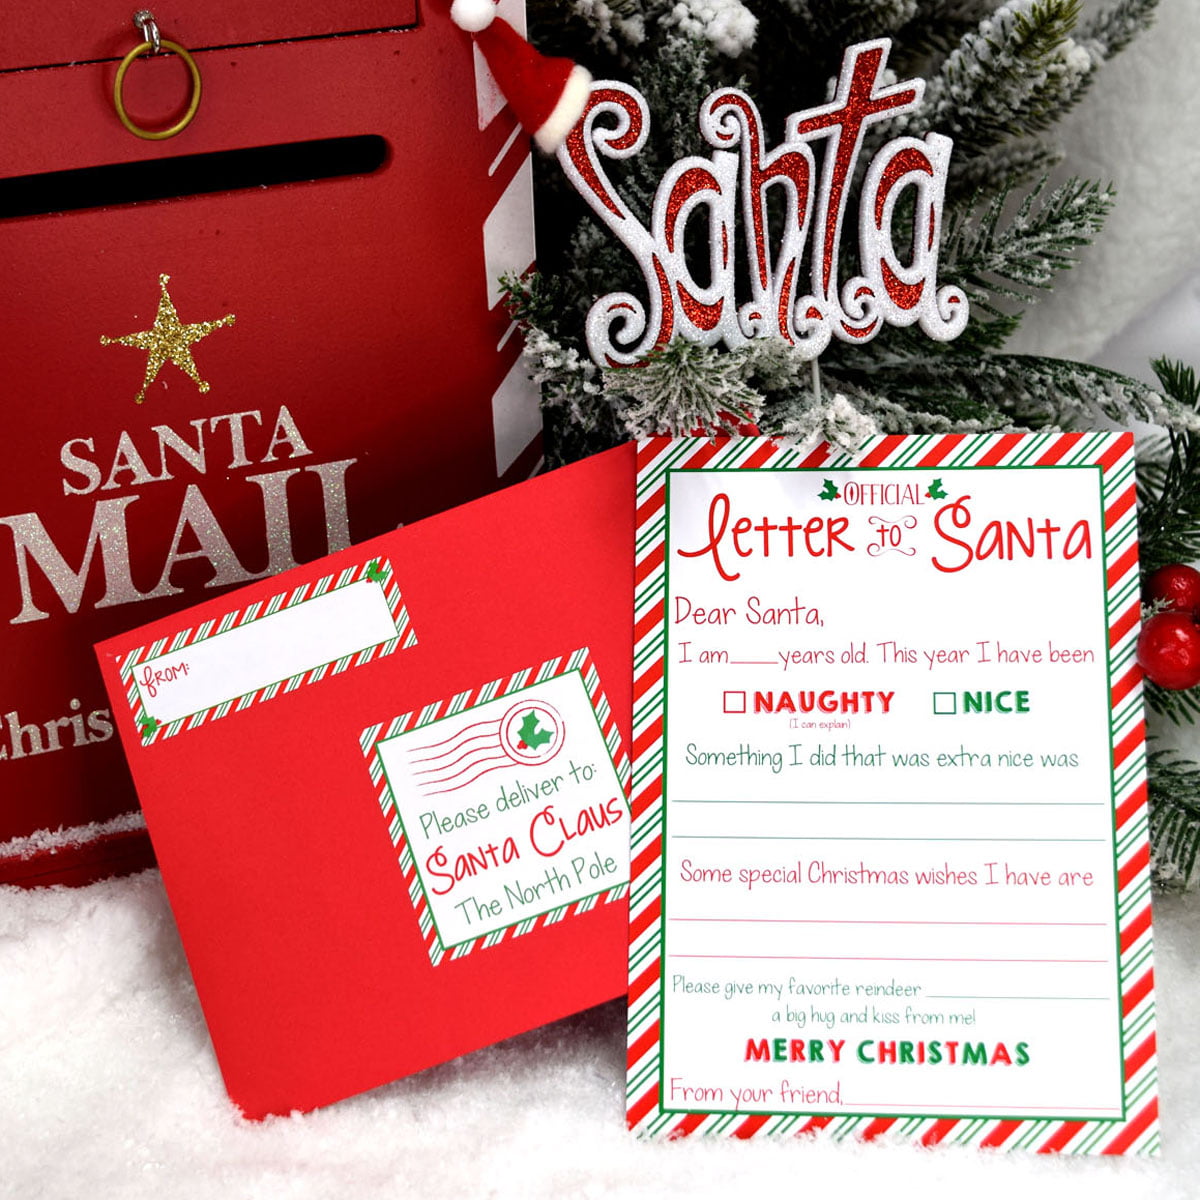 Letter to Santa Keepsake Ornament Kit